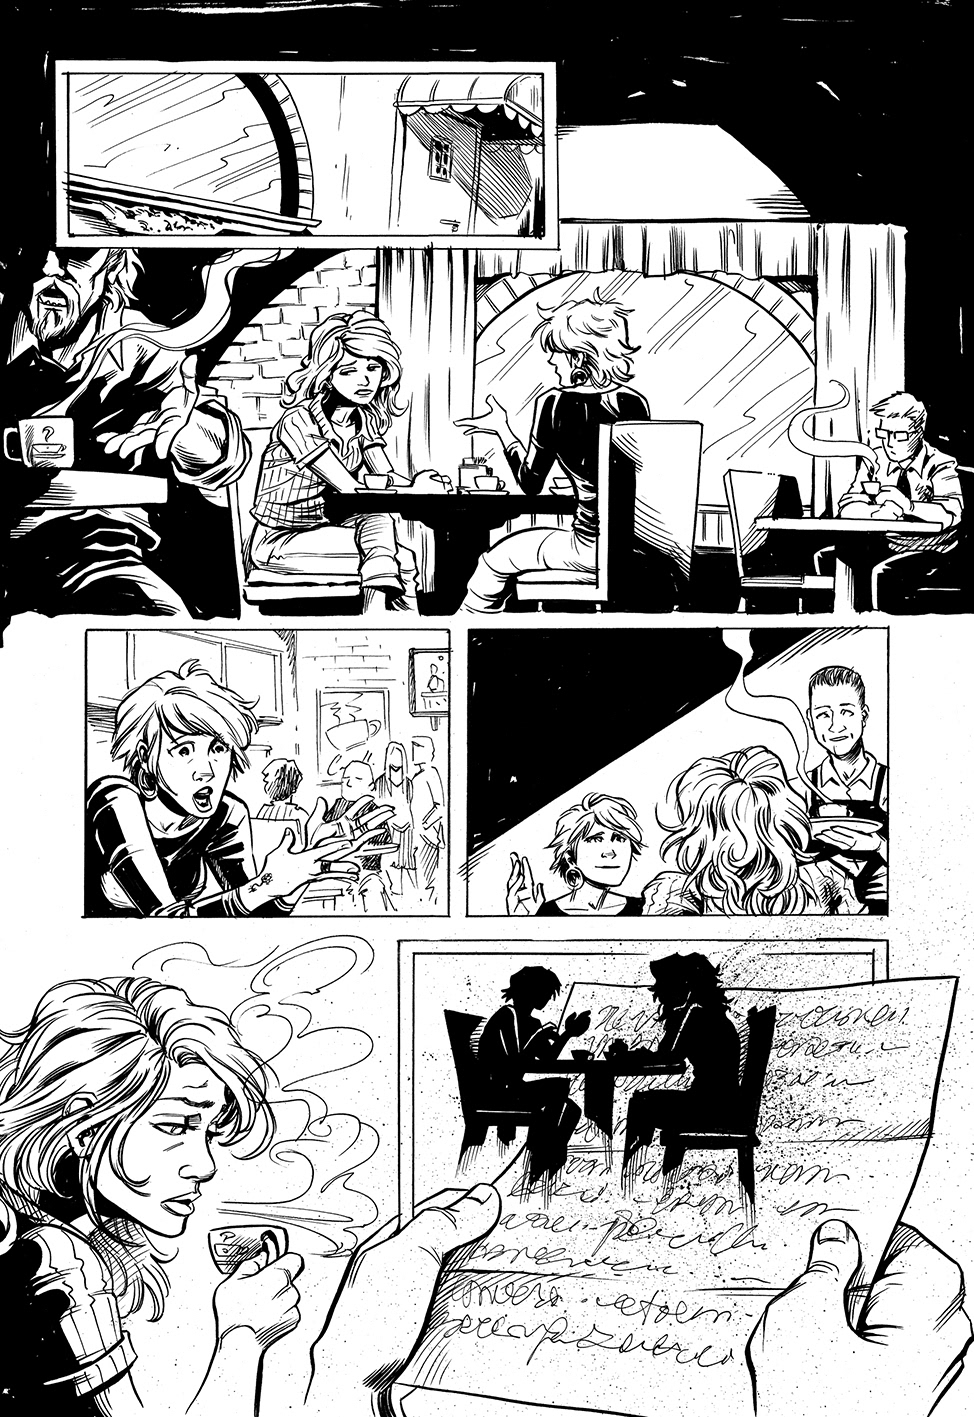 brush and ink Comic Book comics Graphic Novel hq narrative quadrinhos storytelling  